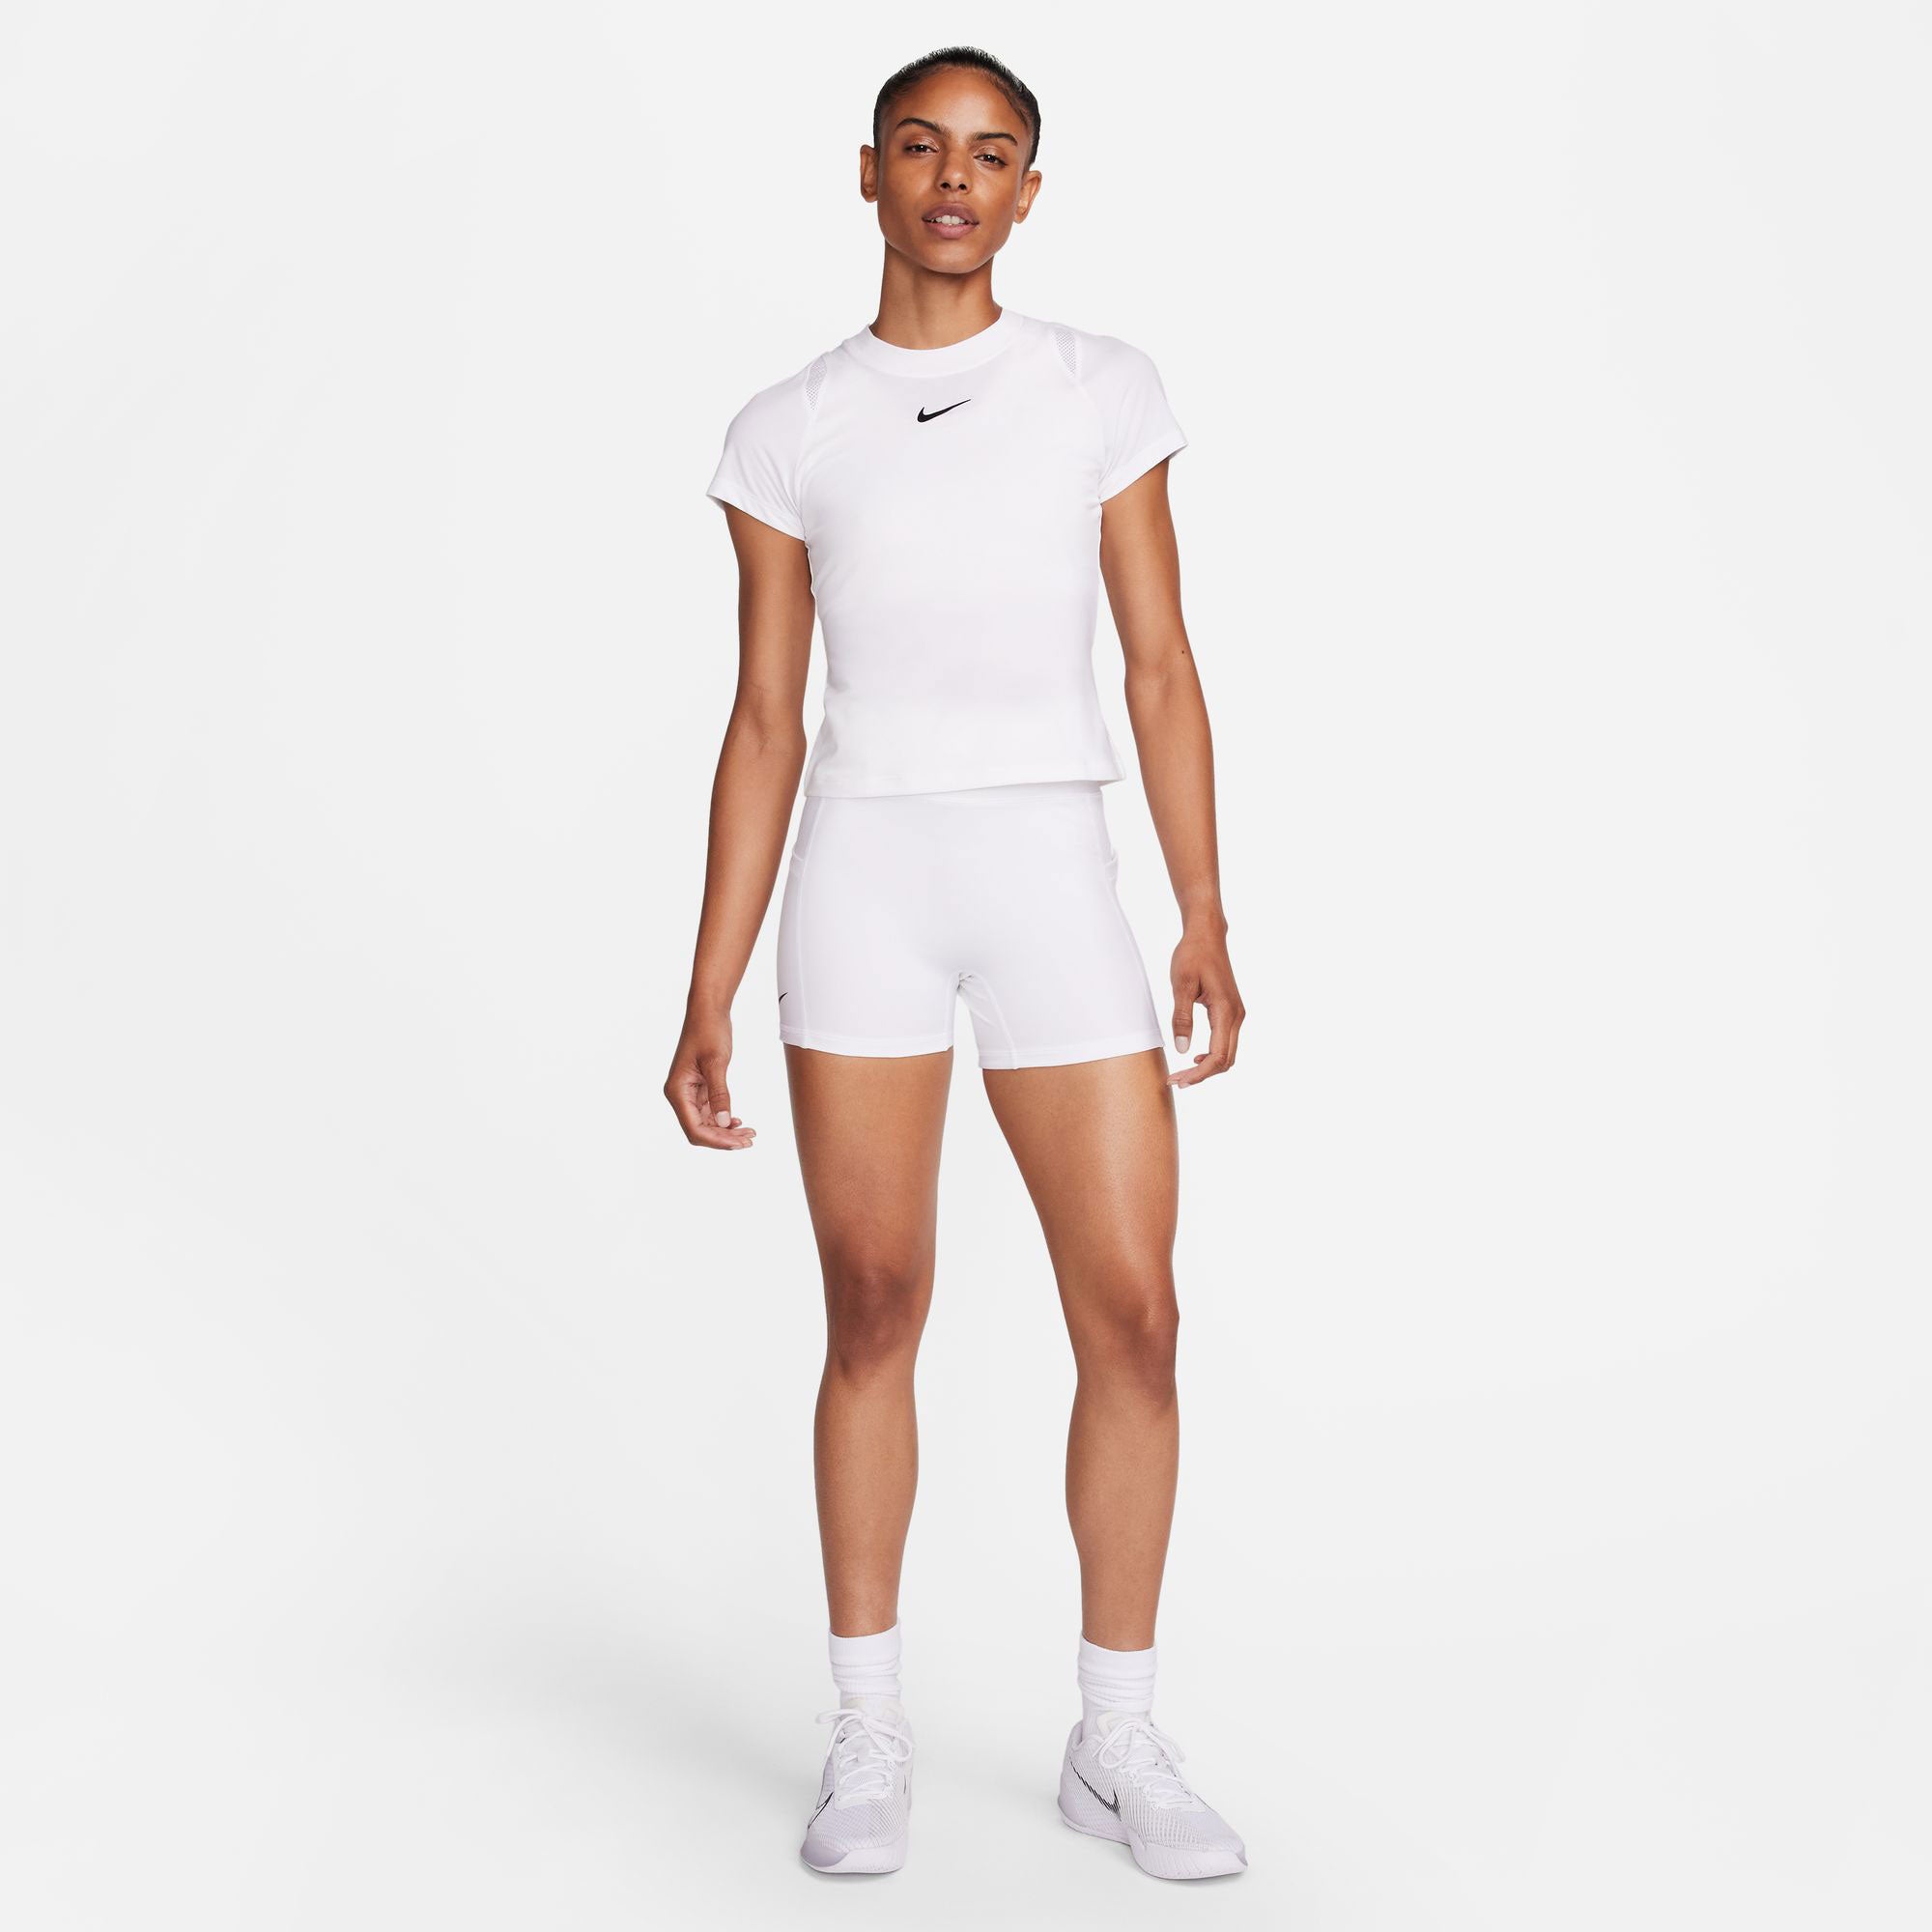 NikeCourt Advantage Women's Dri-FIT Tennis Shirt - White (4)